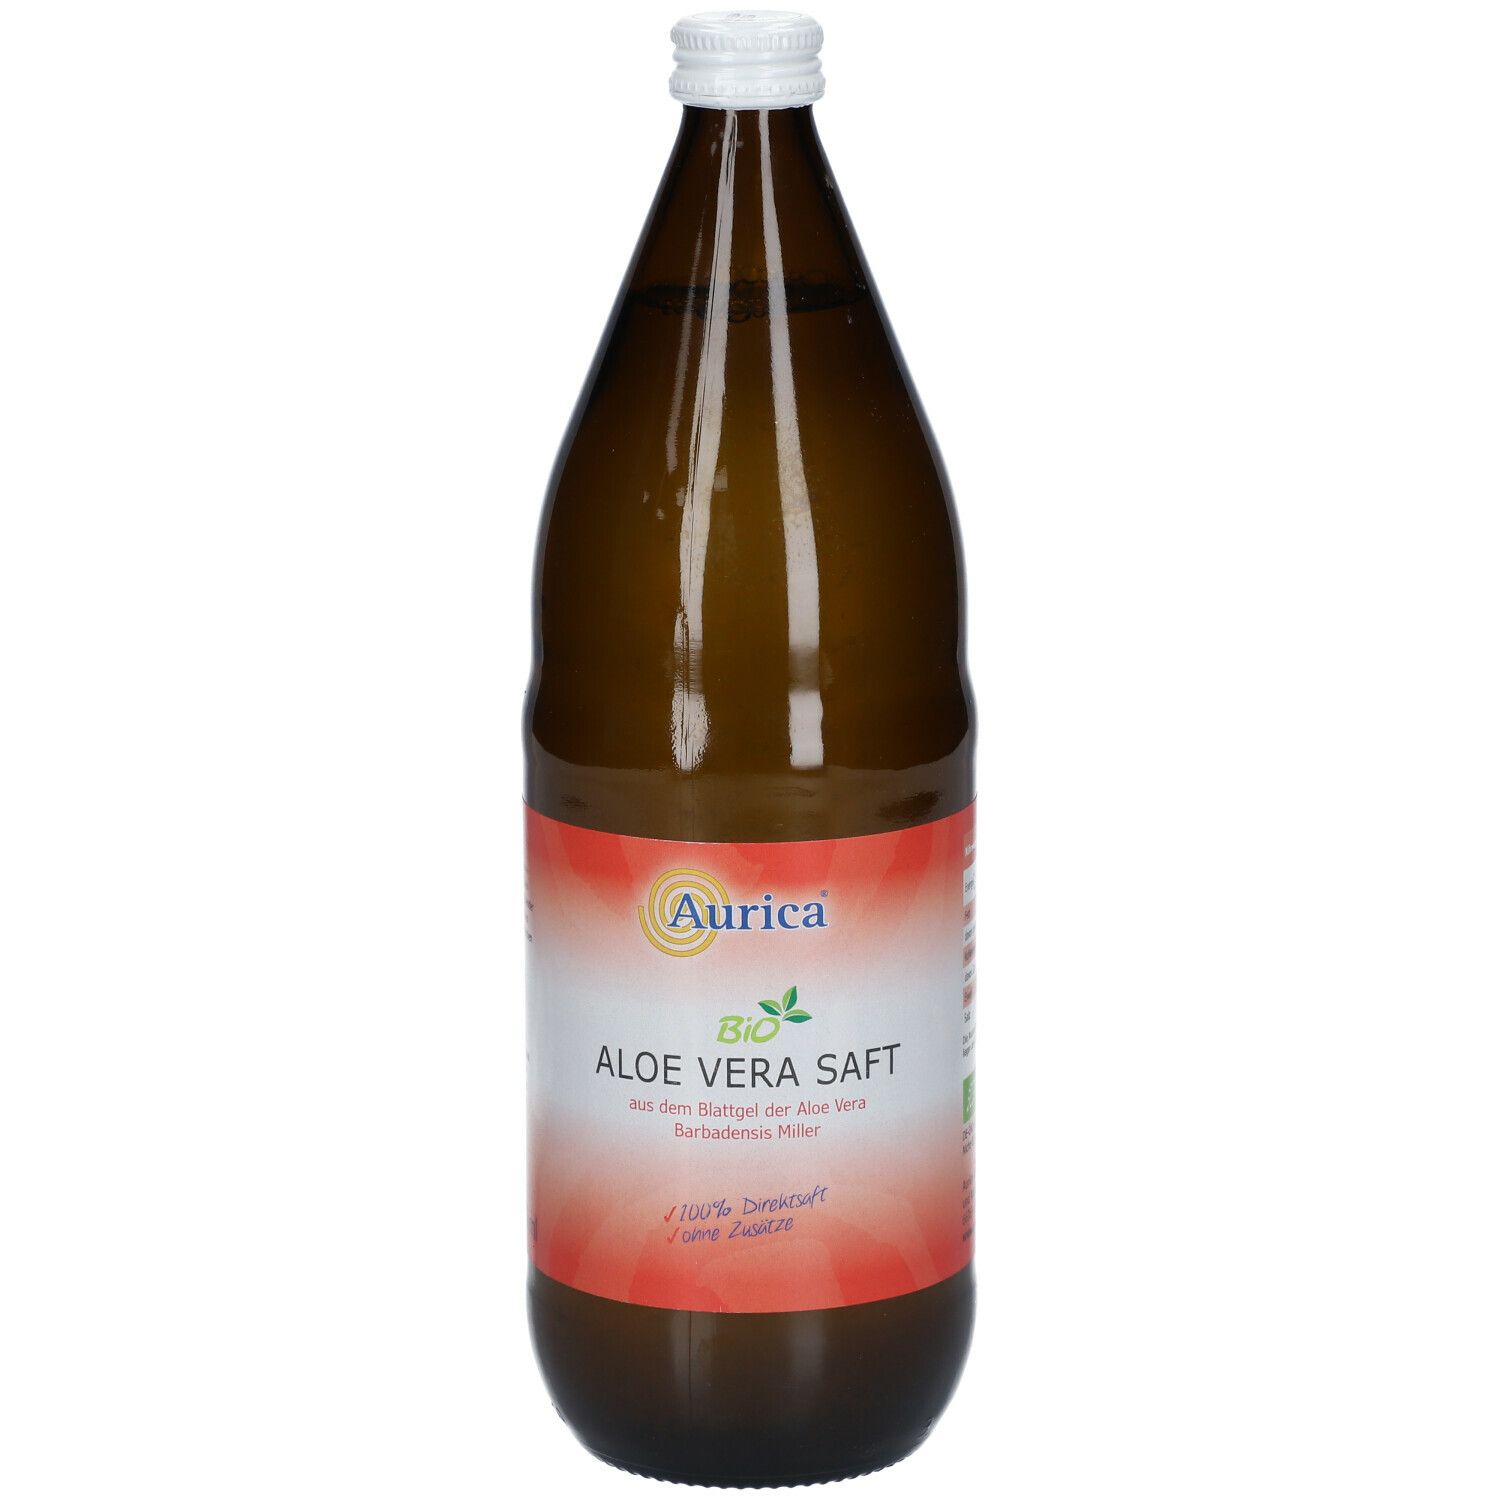 Aurica® Bio aloe vera juice